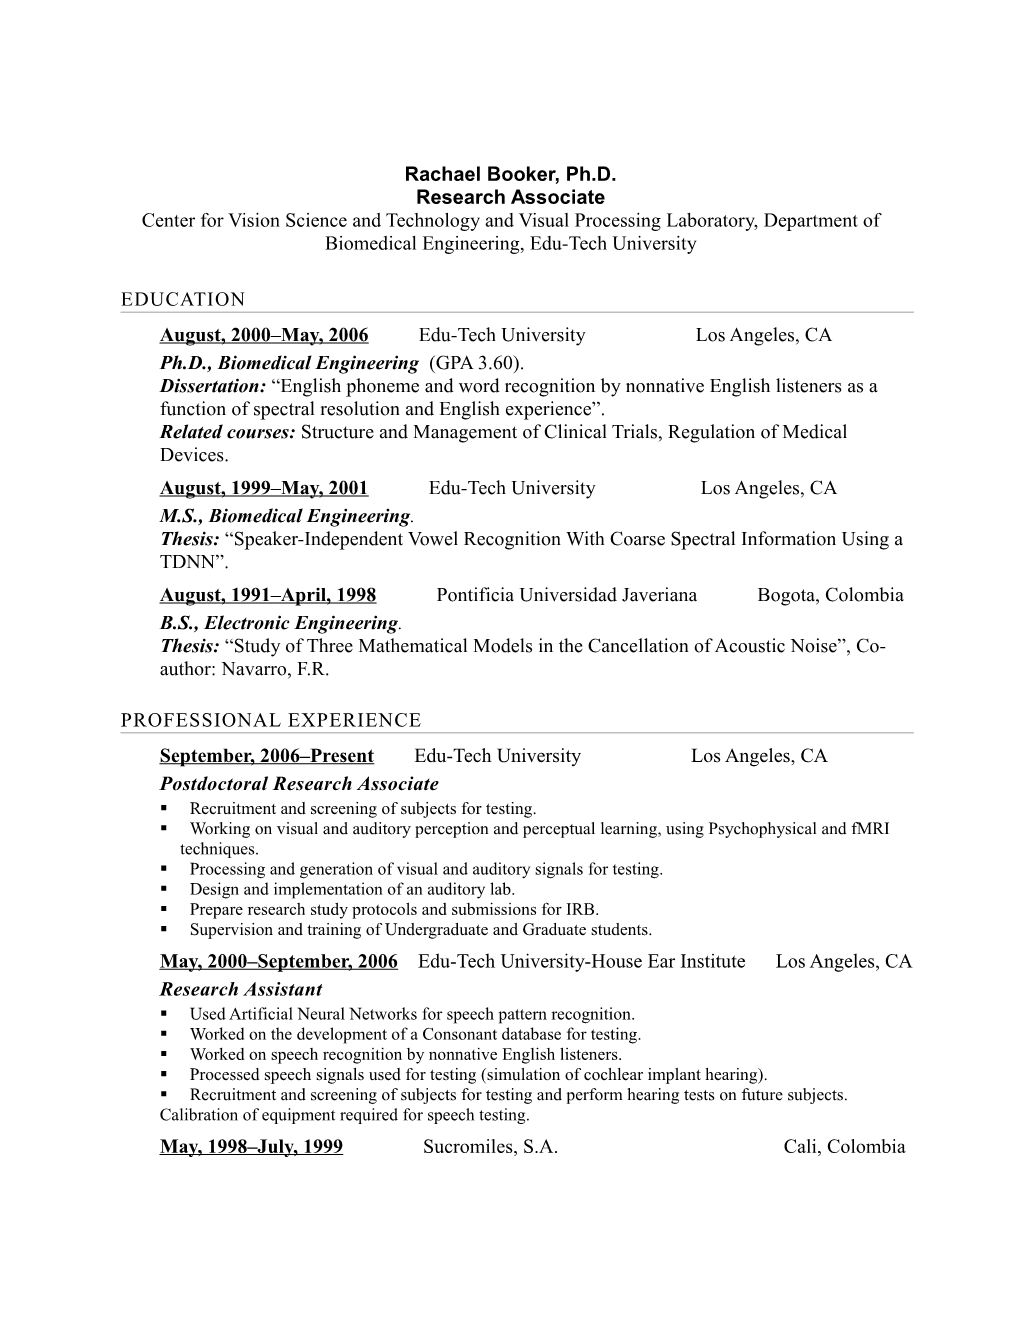 Biomedical Engineering PHD CV Example